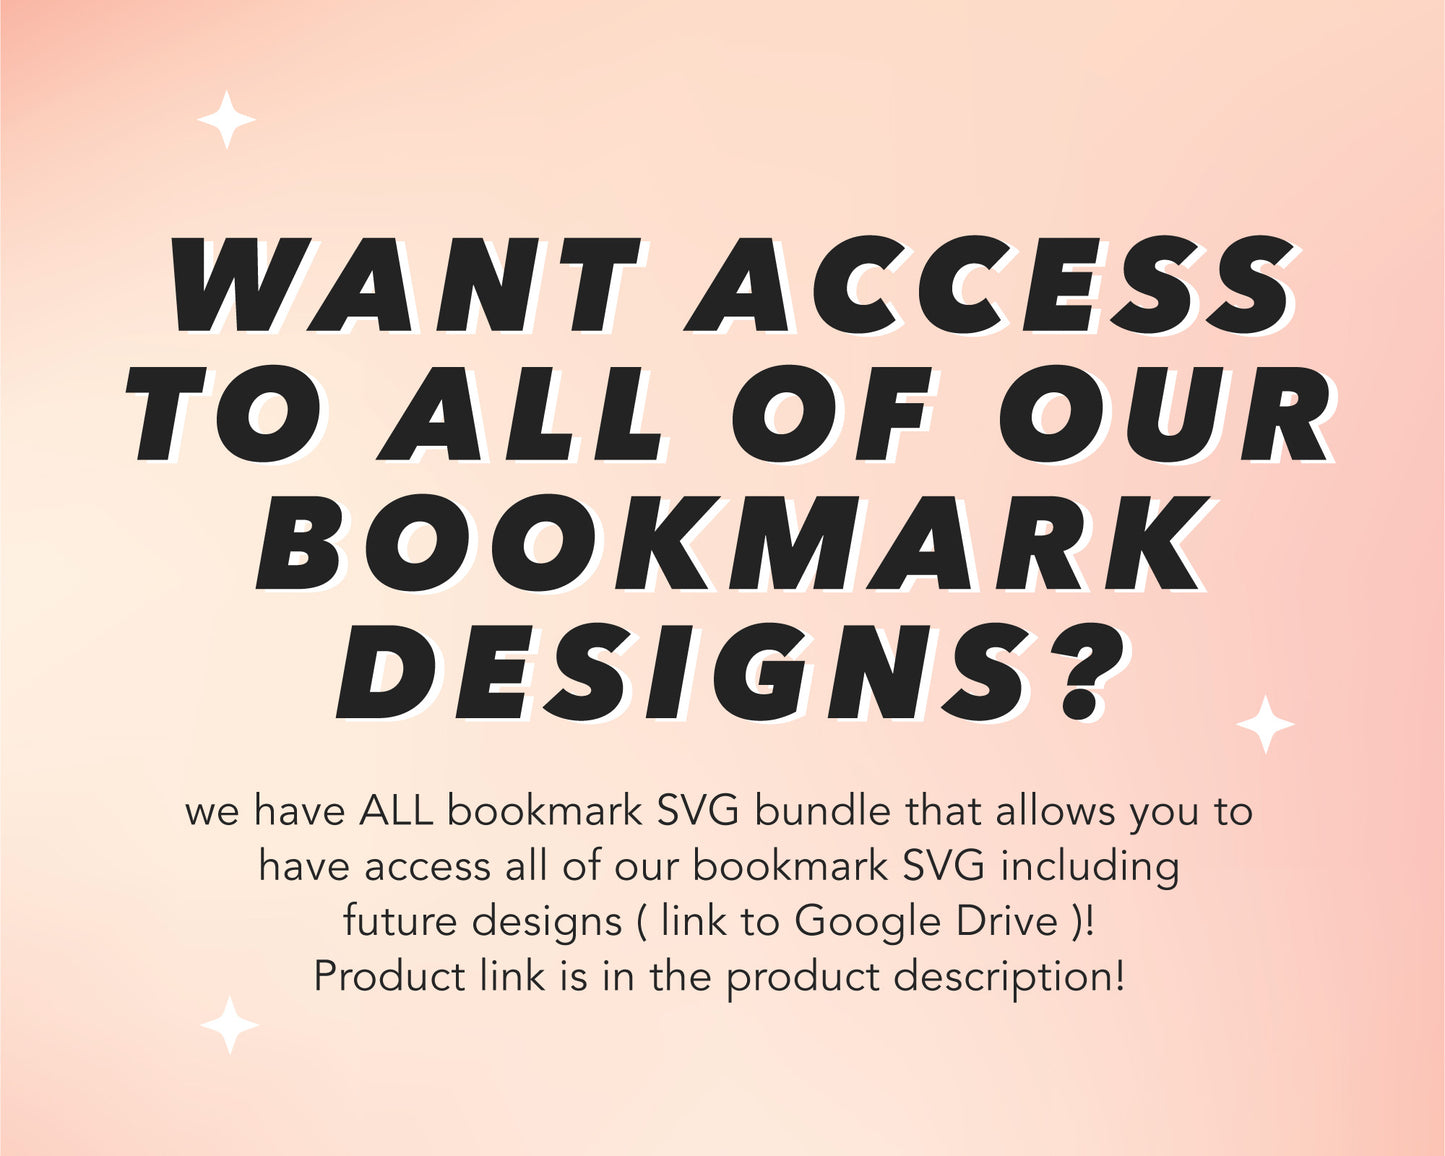 Bookmark Template SVG | Floral Bee SVG